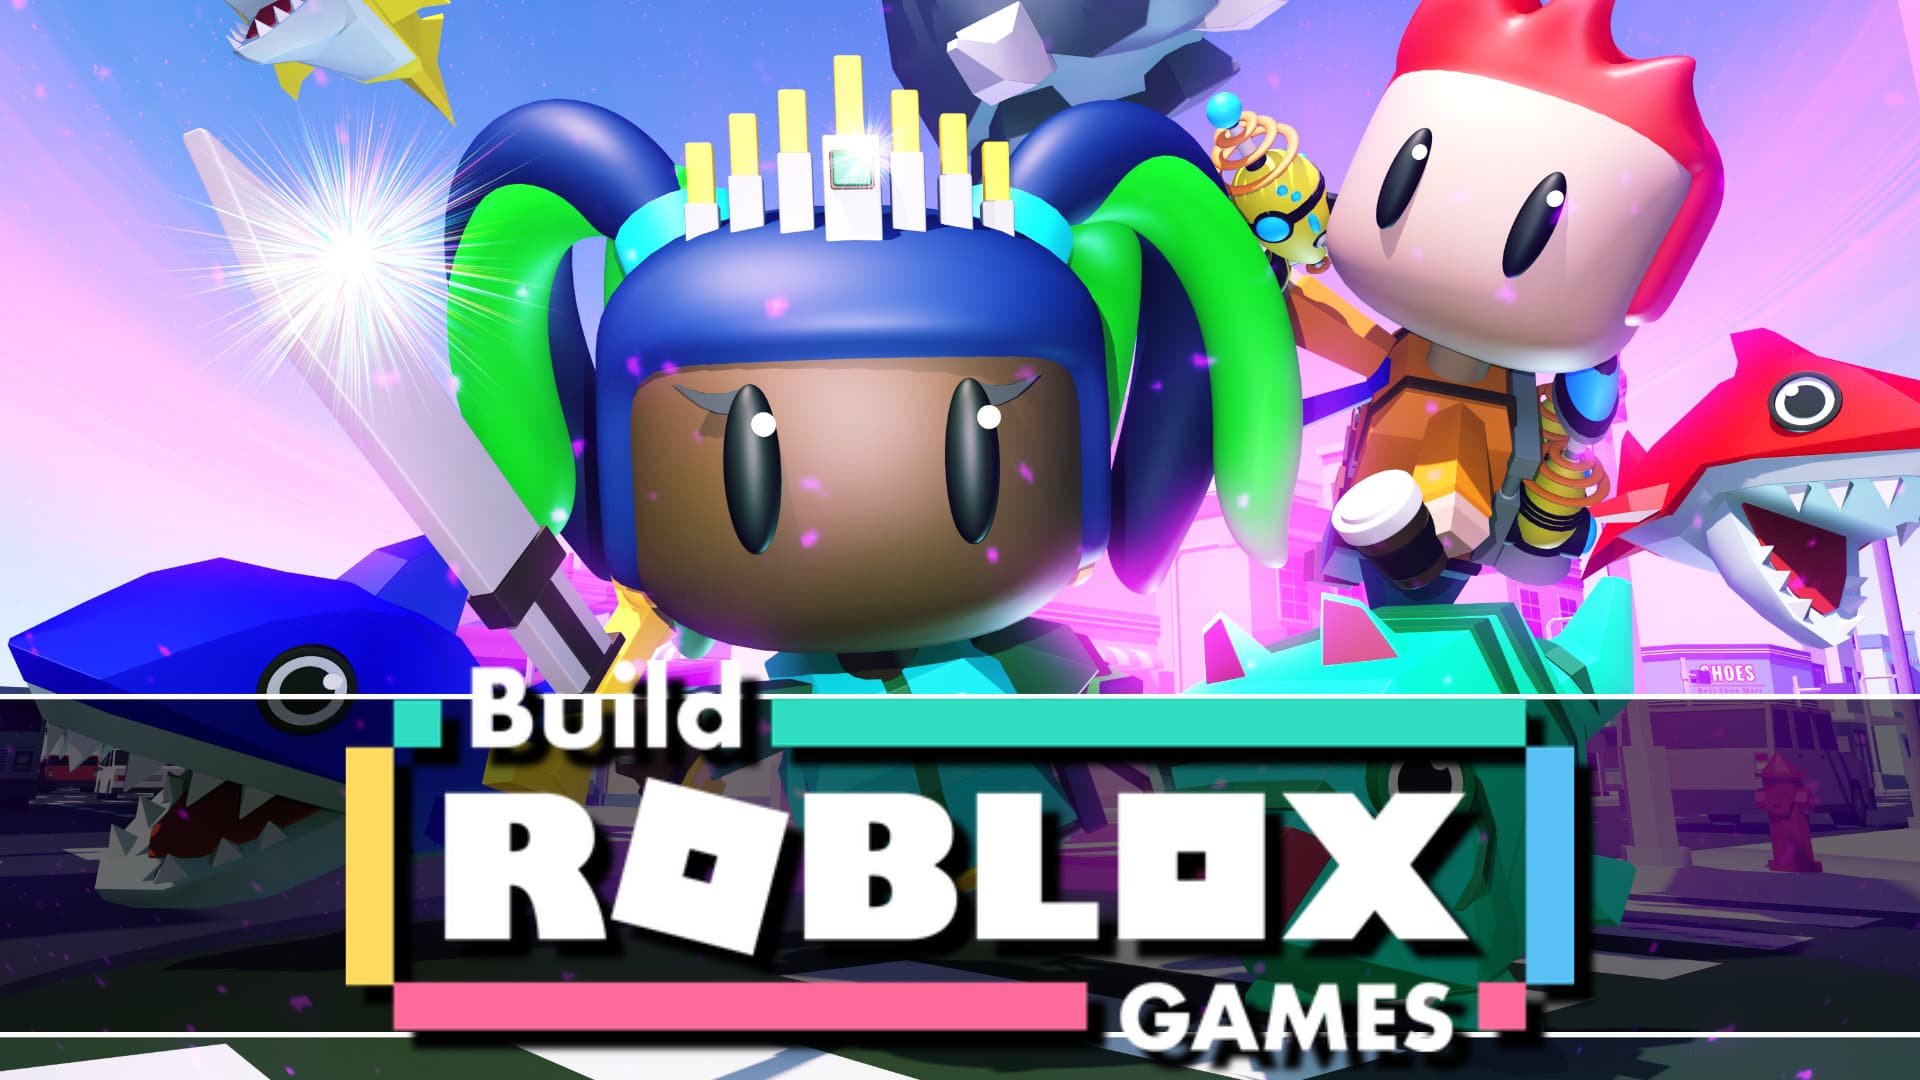 Wario64 on X: Humble Software Bundle: Build Roblox Games https